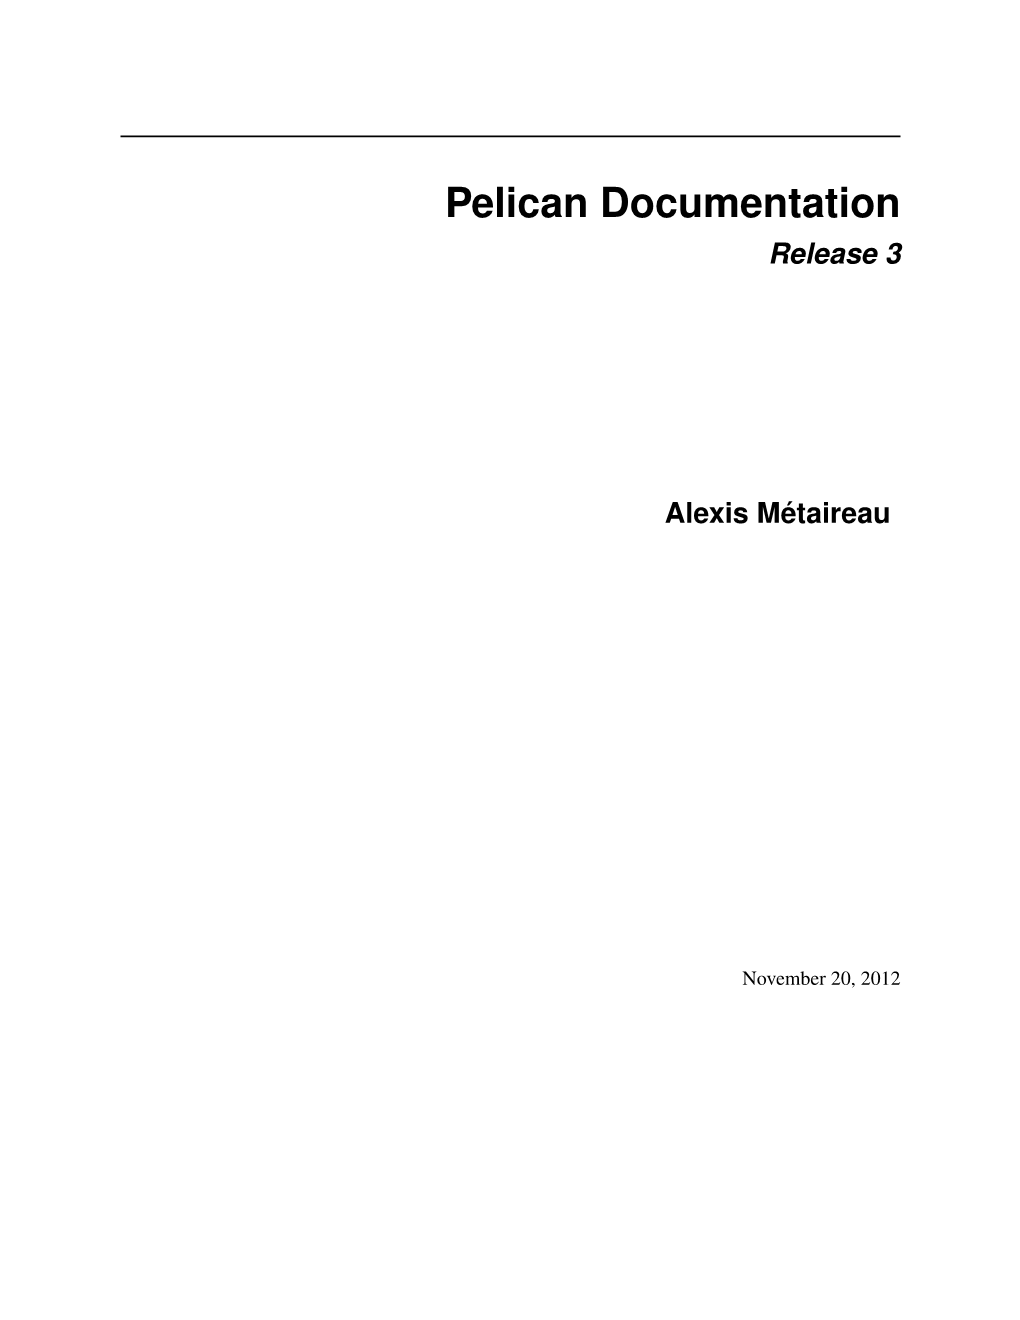 Pelican Documentation Release 3